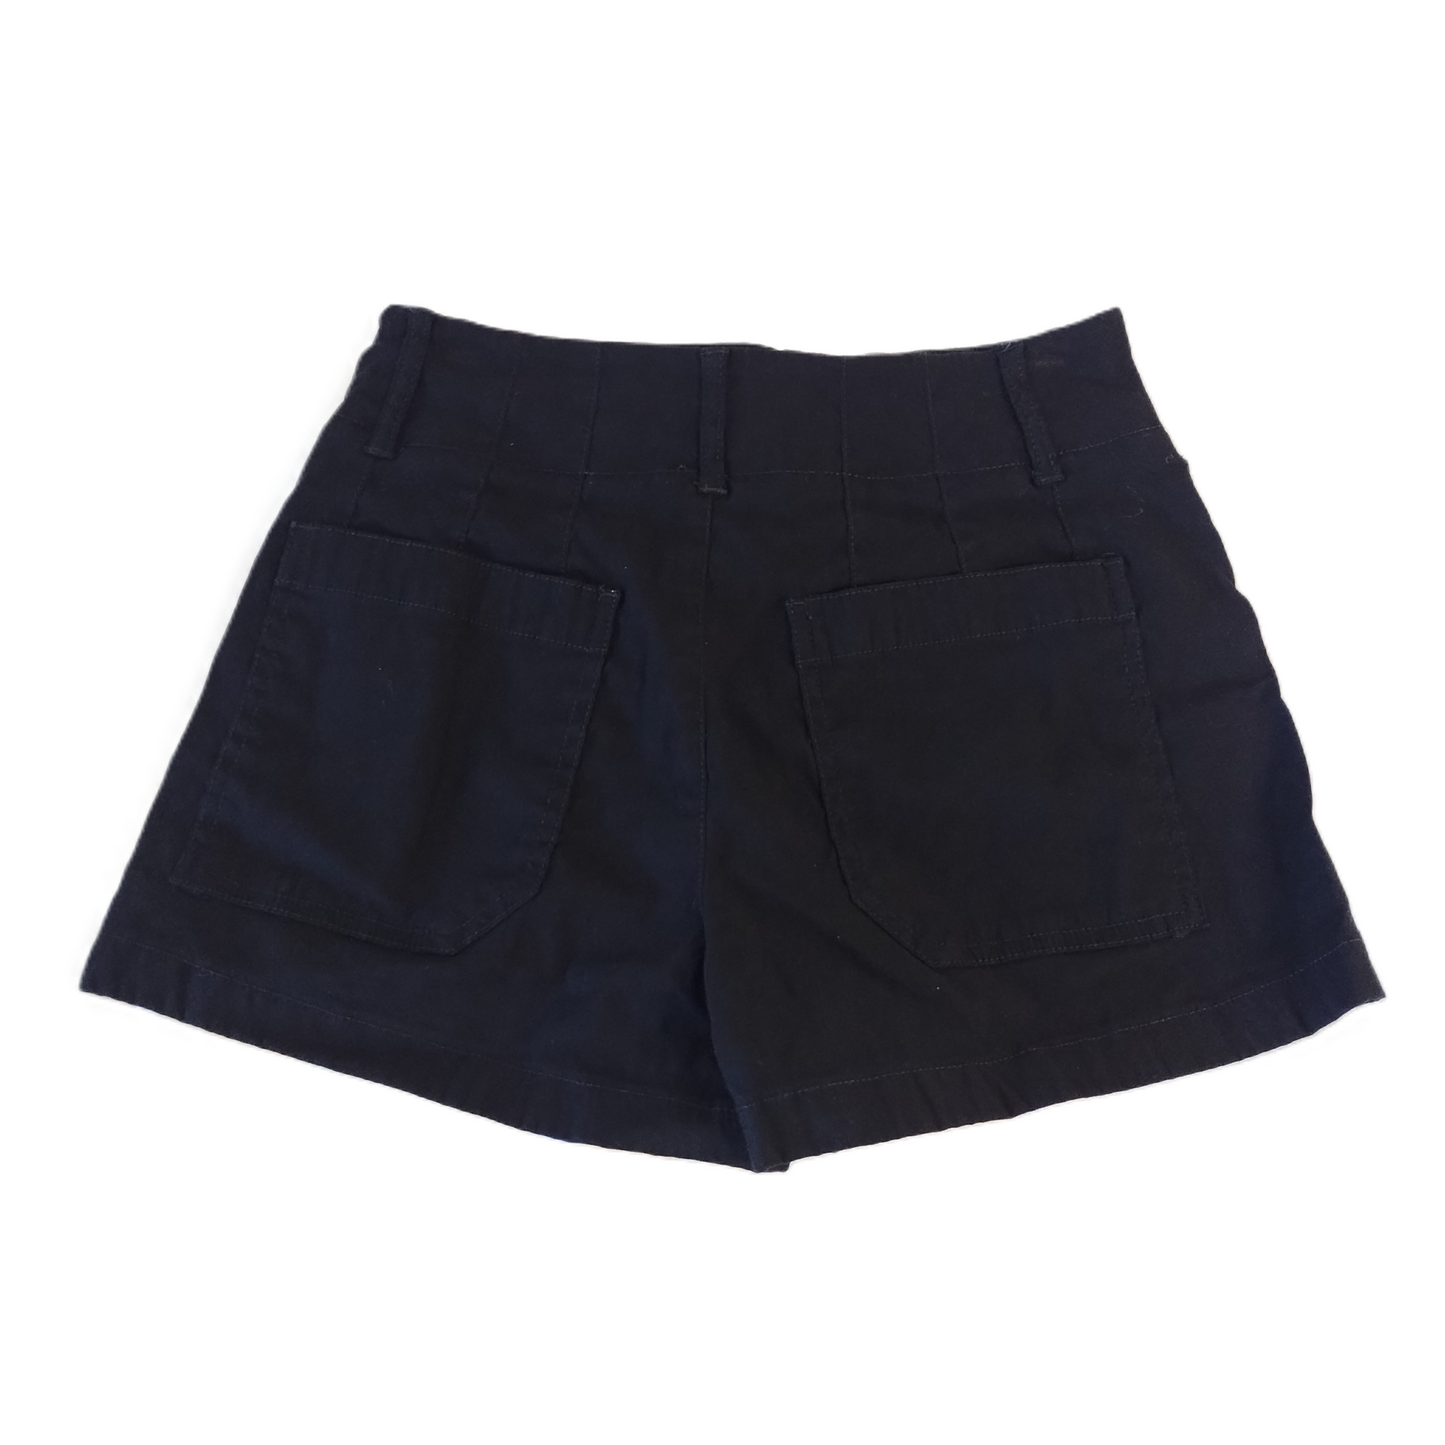 Black Shorts By Maeve, Size: 2